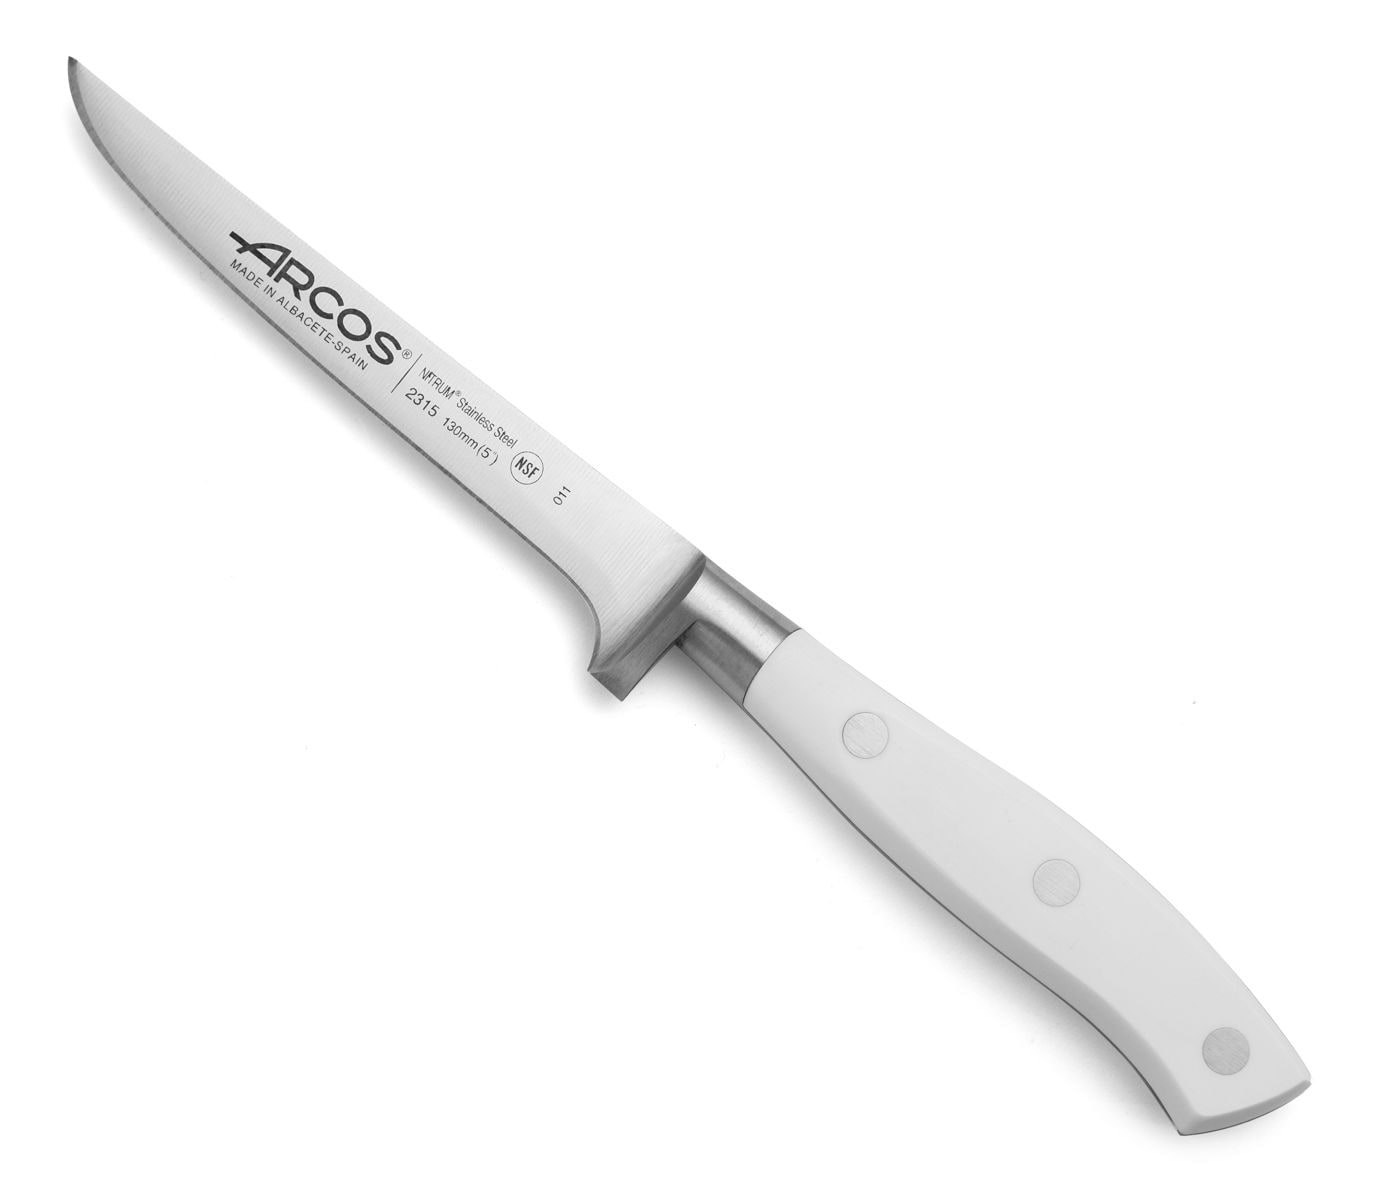 Cuchillo Arcos Cocinero 20 cm - Riviera Blanc